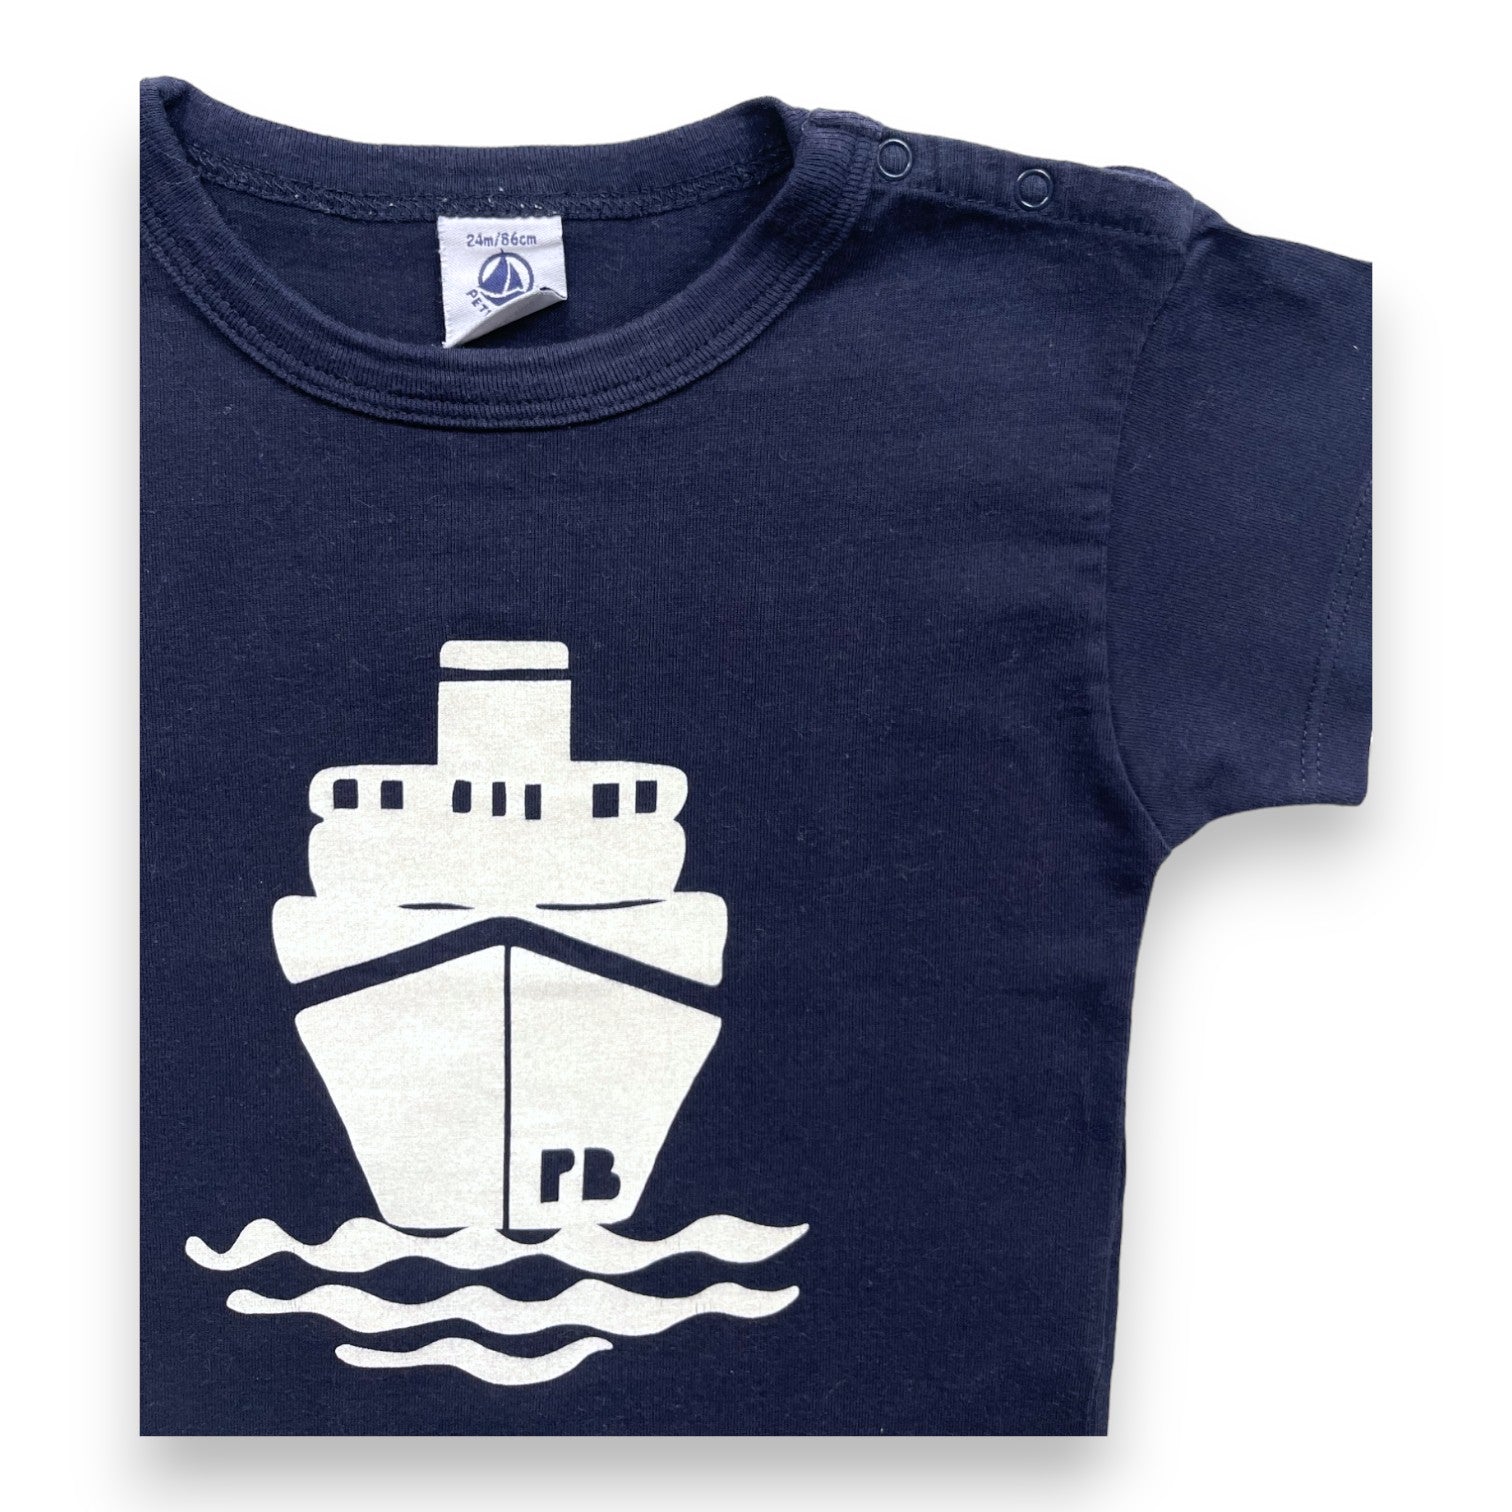 PETIT BATEAU - T shirt bleu marine paquebot - 2 ans